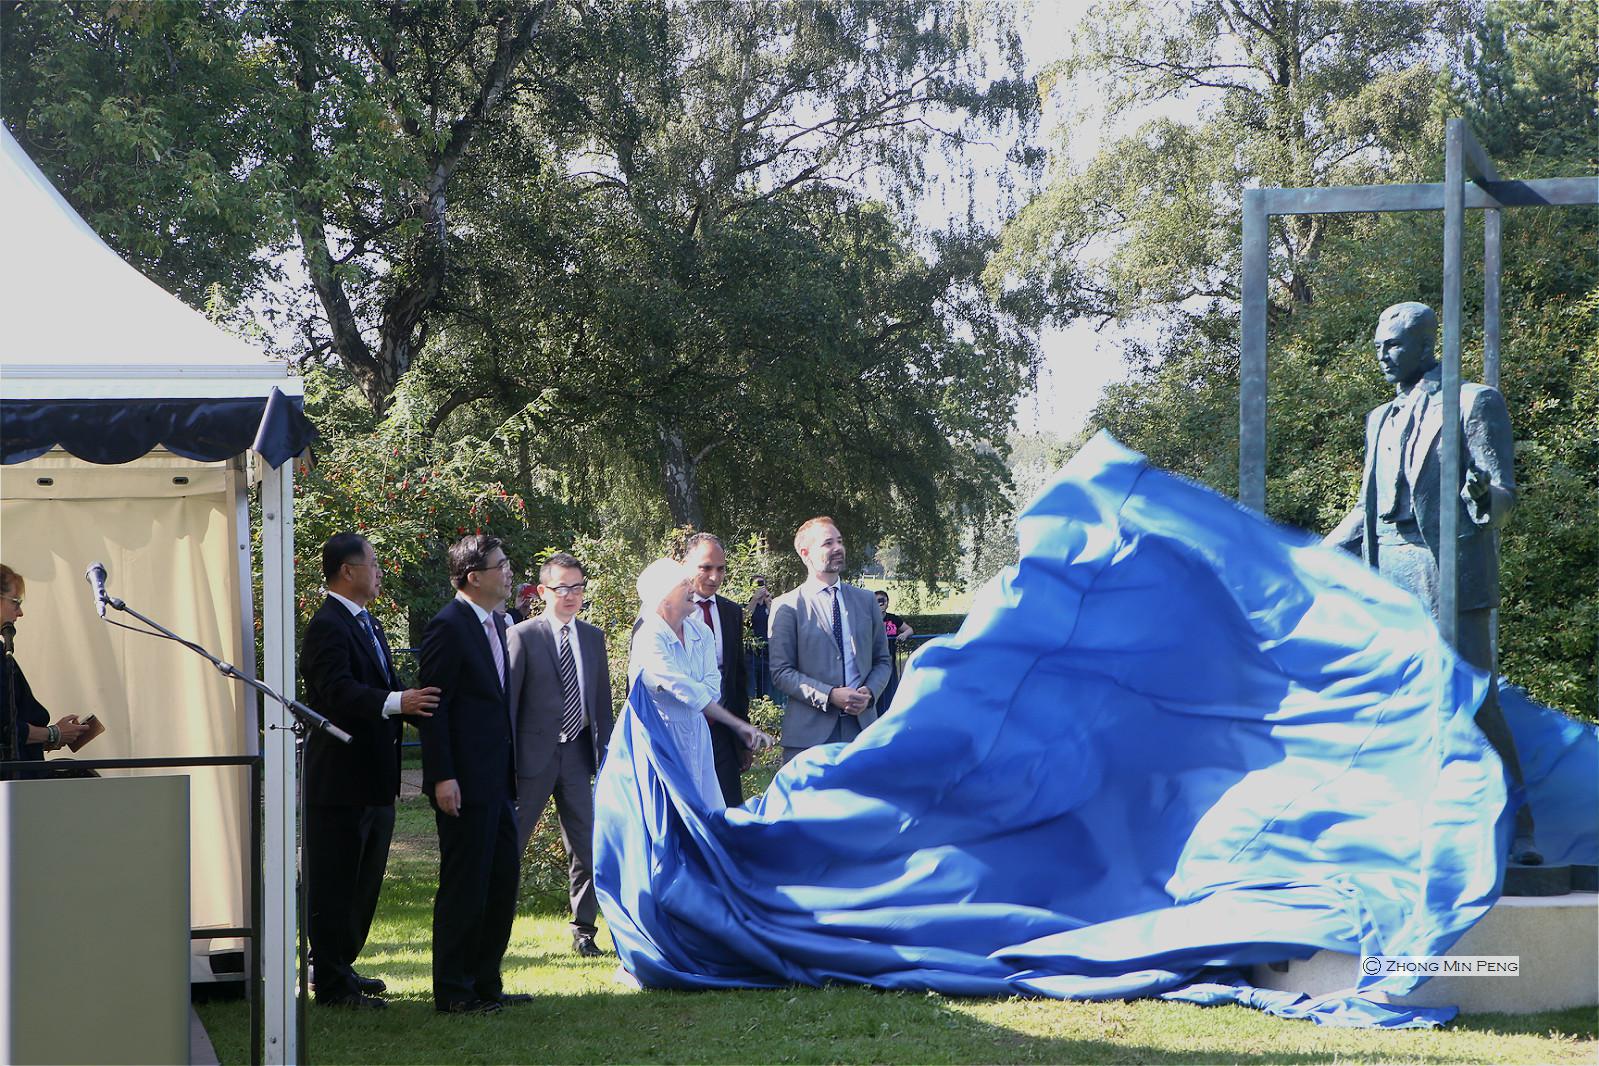 Queen of Denmark unveils statue honoring Nanjing Massacre lifesaver